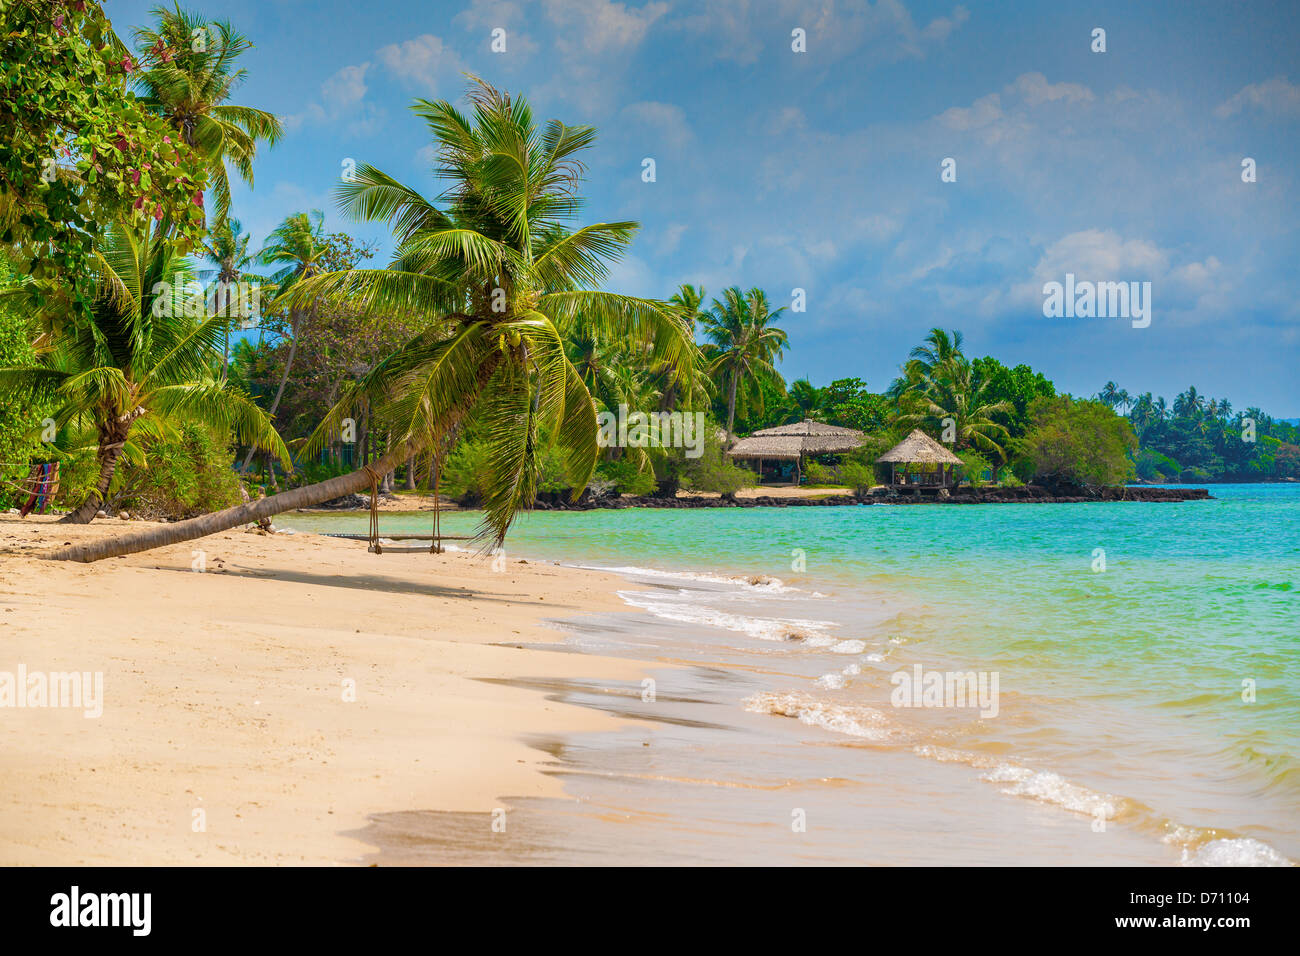 beautiful beach on the island Stock Photo